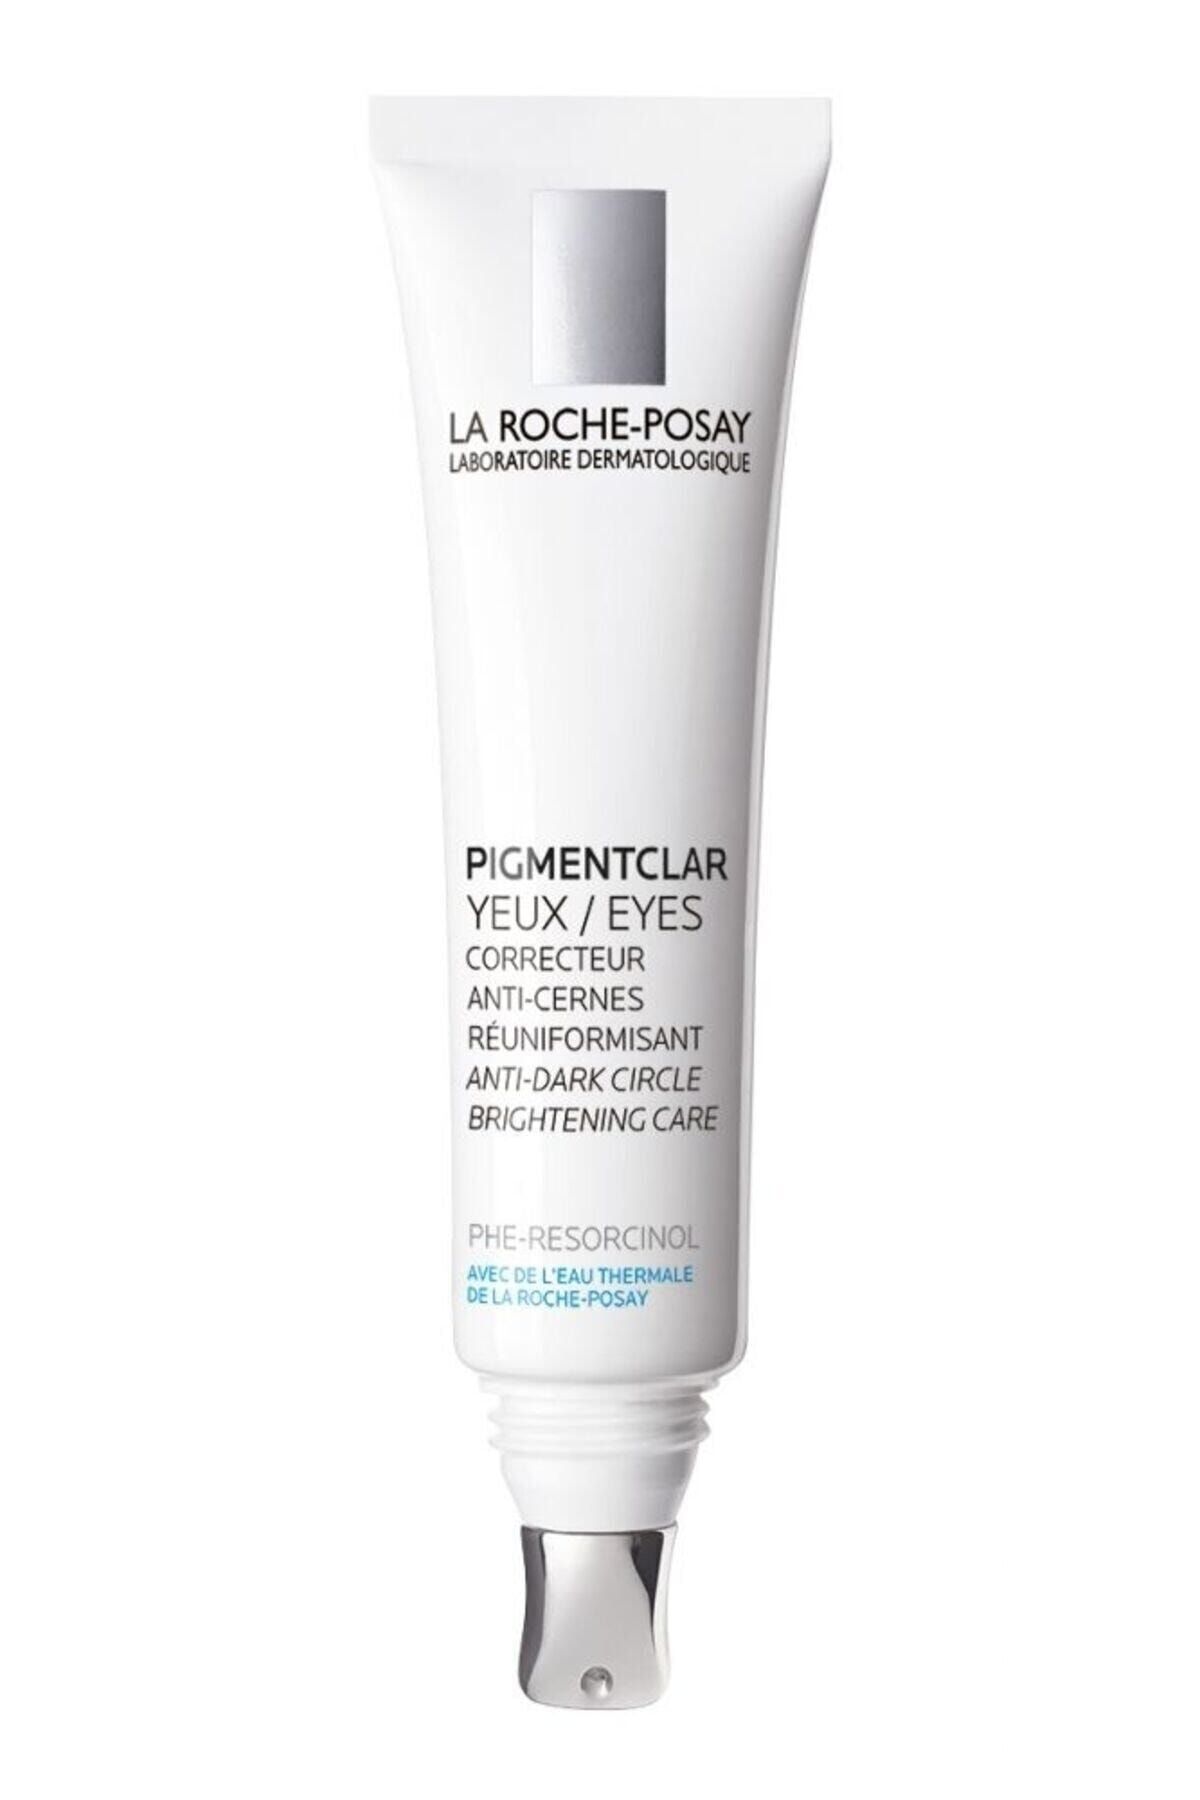 La Roche Posay UnderEye Circles Illuminating Concealer Pigmentclar Yeux Eye Contour Care Cream15ml LRP